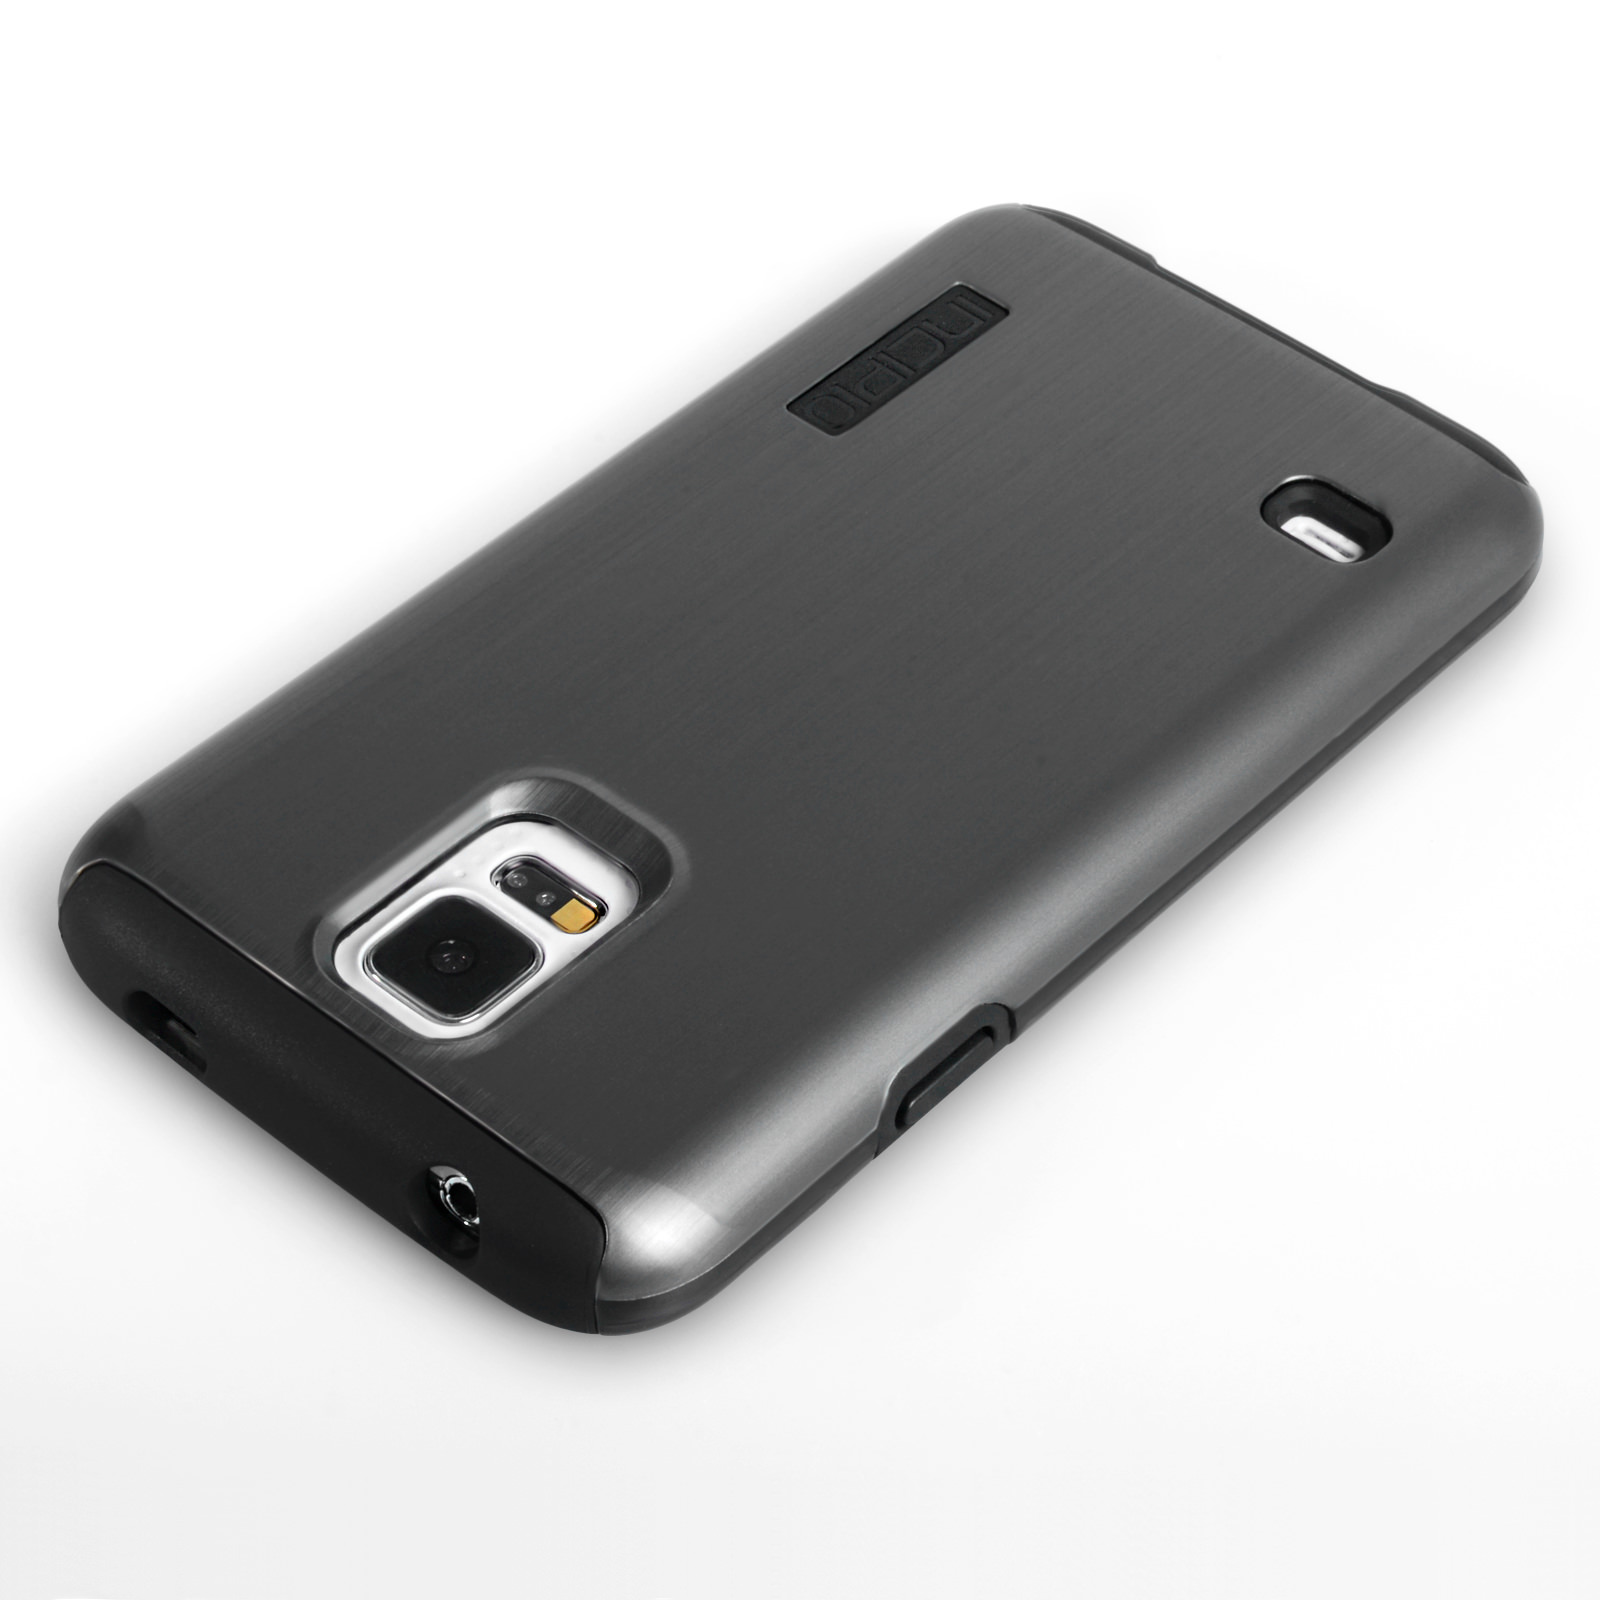 Incipio DualPro Shine for Samsung Galaxy S5 - Silver/Black